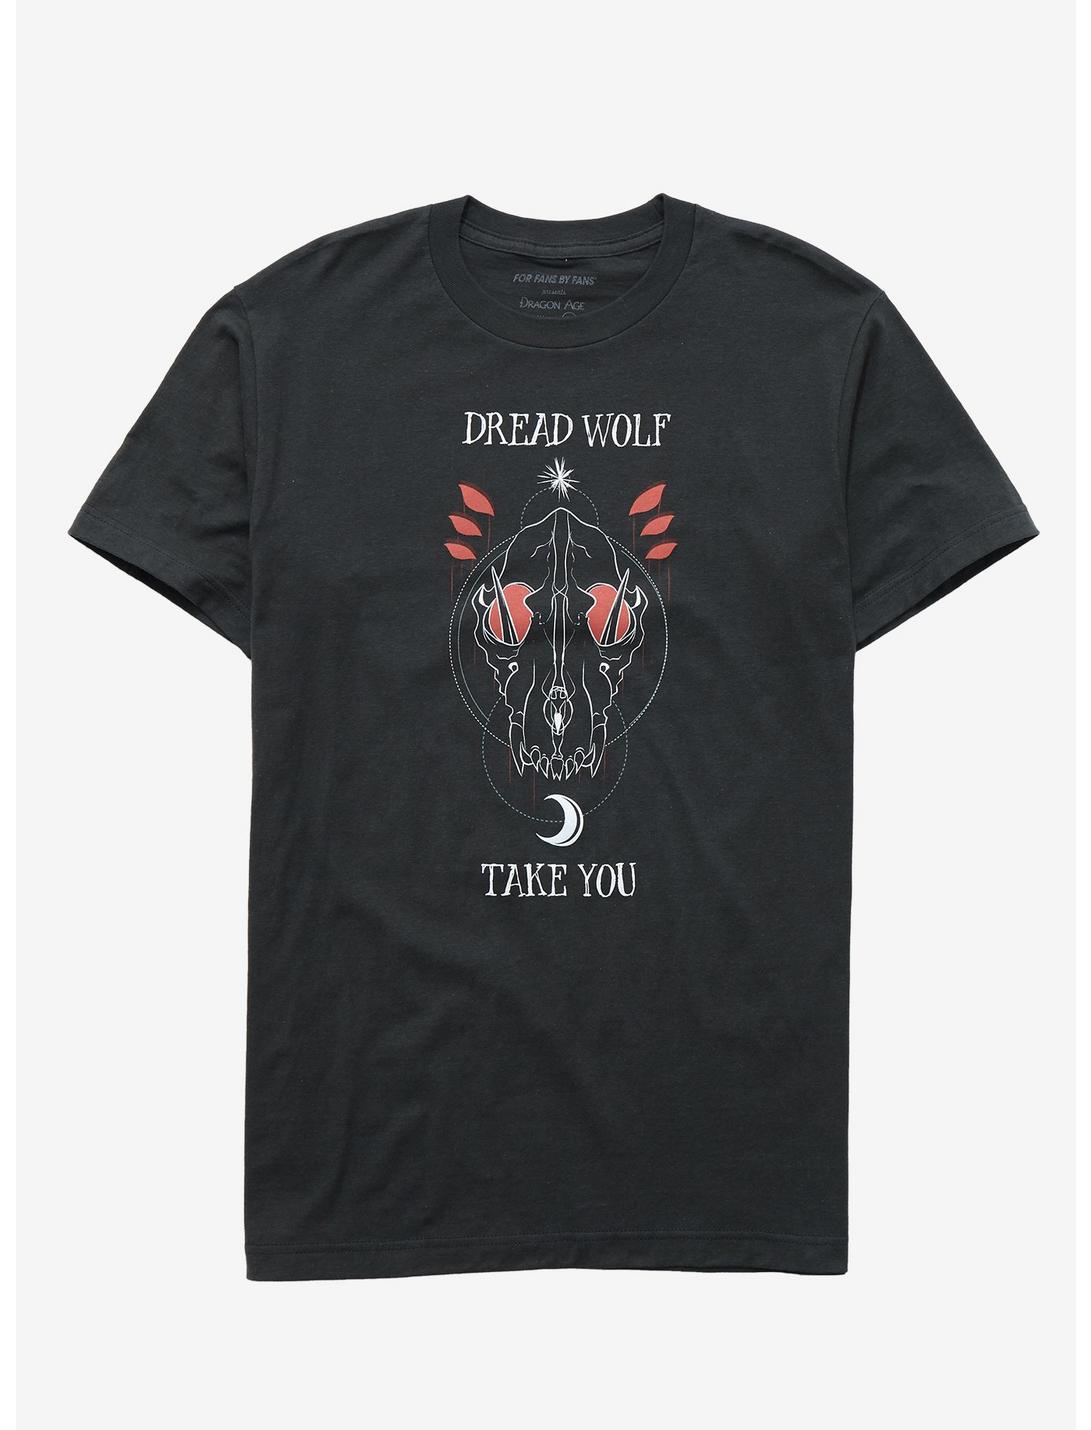 Dragon Age Dread Wolf Take You T-Shirt, CHARCOAL, hi-res